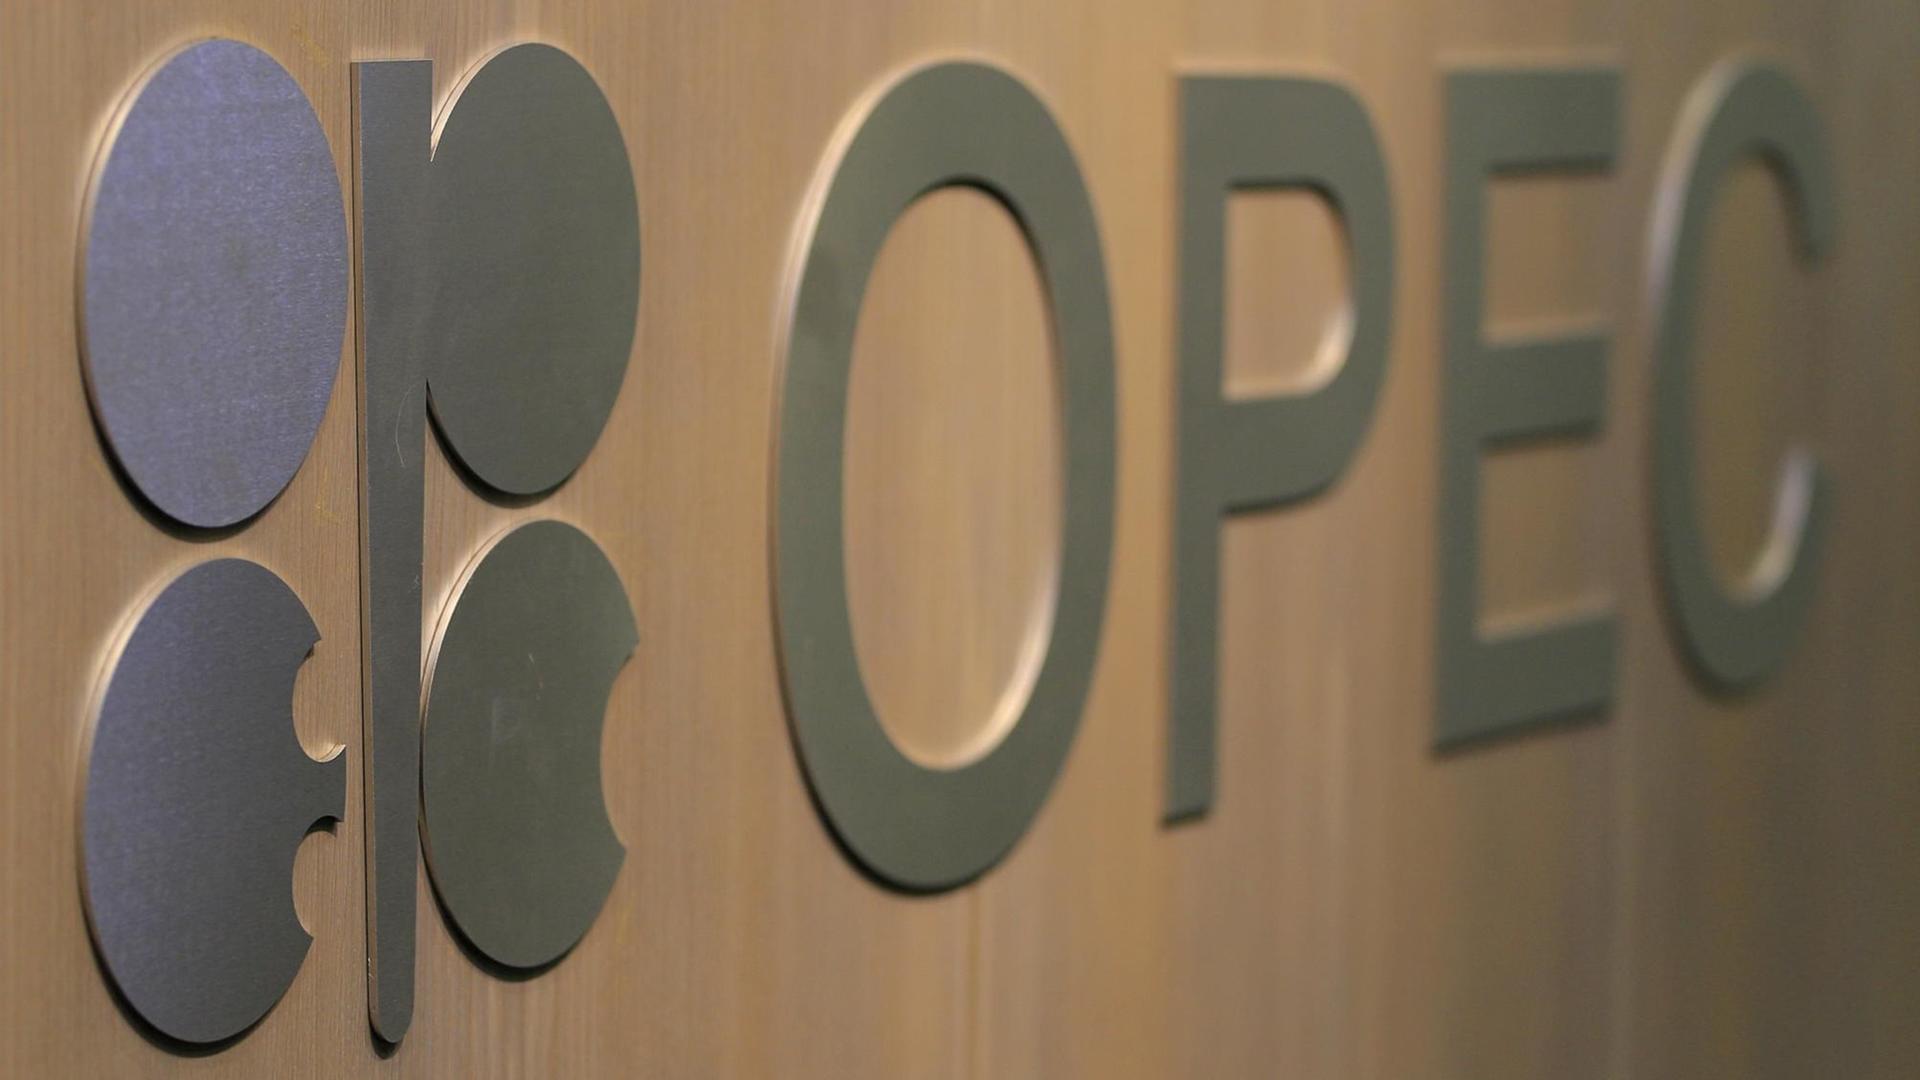 Das Logo der OPEC (Organization of the Petroleum Exporting Countries)